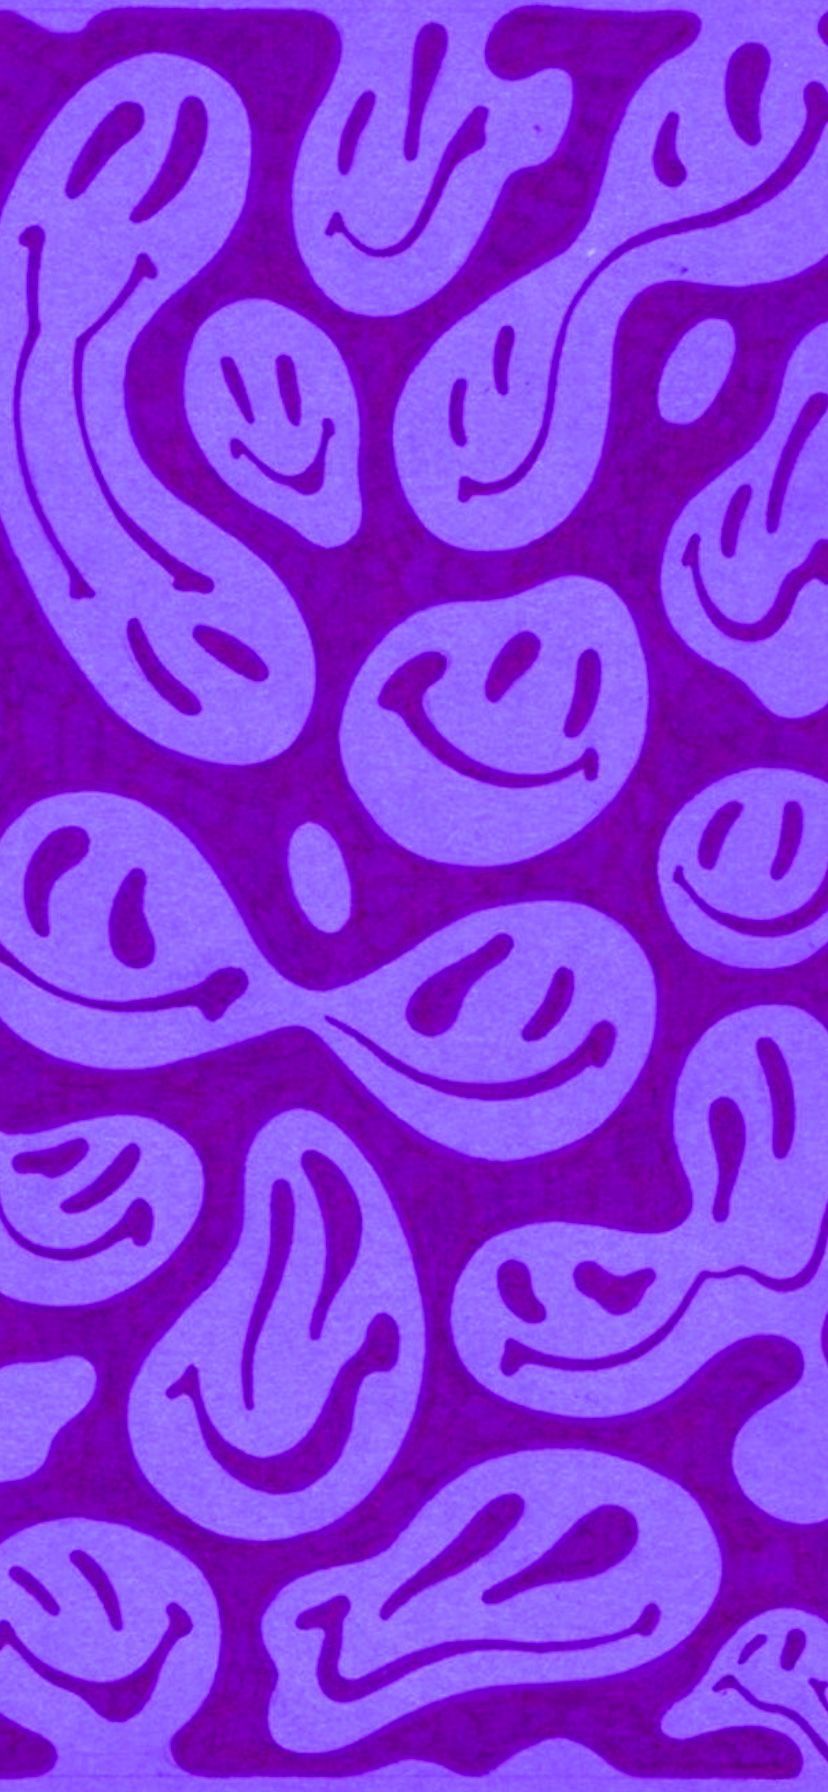 planodefundo #wallpaper #iphonewallpaper #iphonexwallpaperfullhd #follow # purple #smiling. Purple wallpaper iphone, Aesthetic iphone wallpaper, Art collage wall